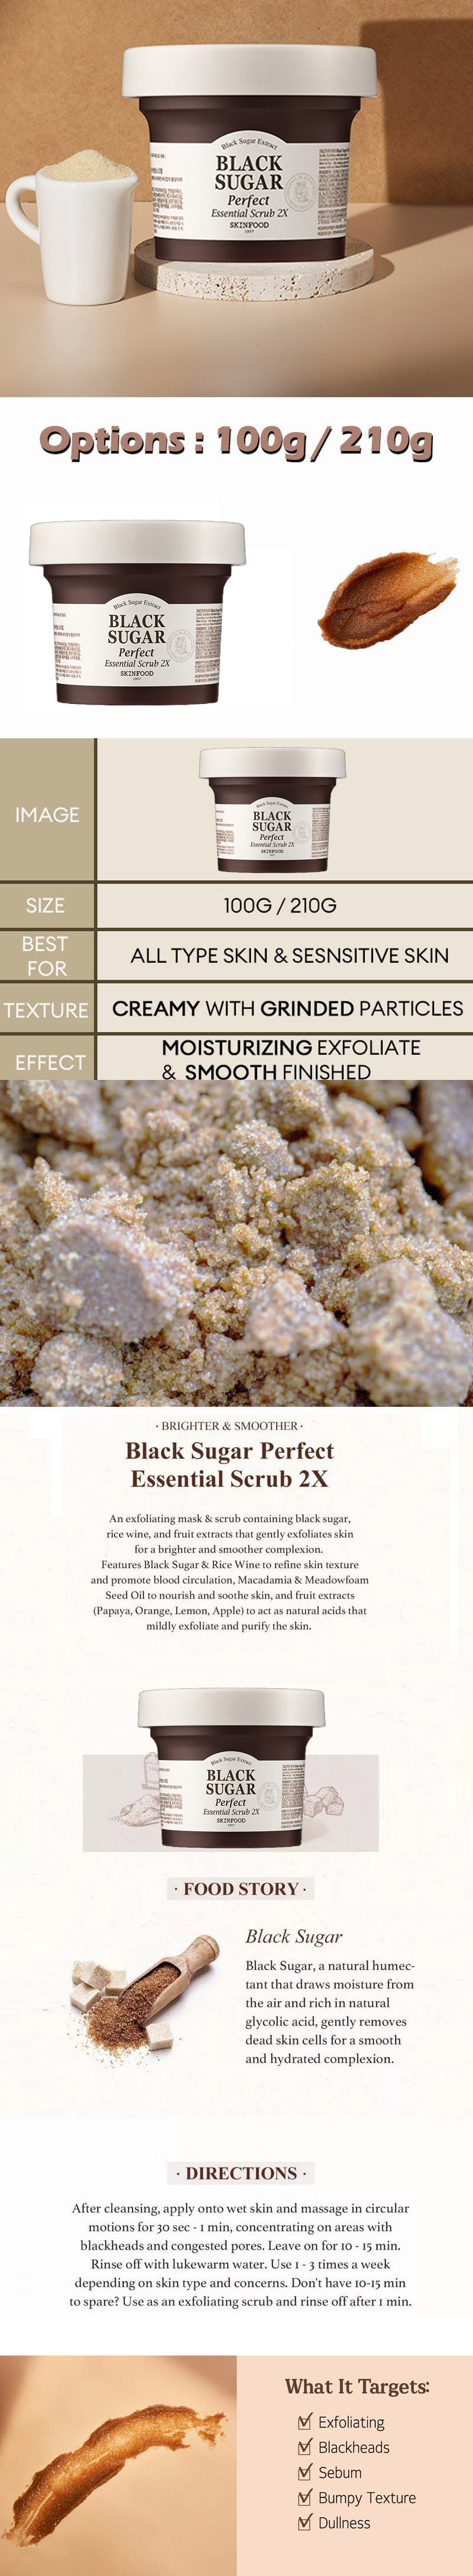 [SKINFOOD] Black Sugar Perfect Essential Scrub 2X (100g) / (200g)